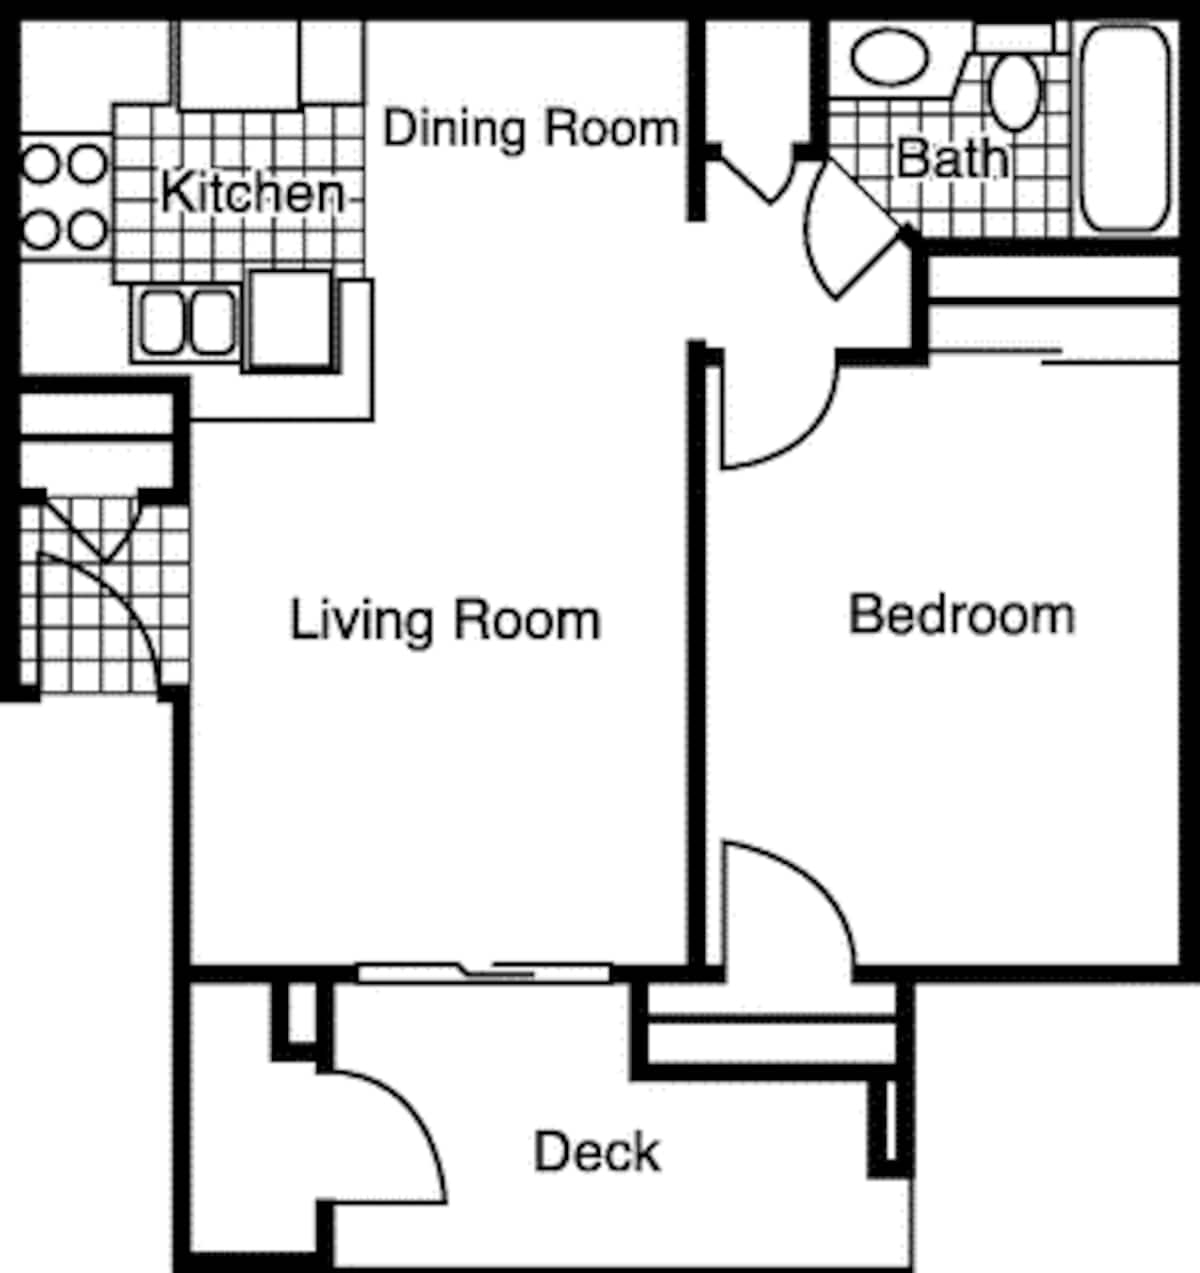 Floorplan diagram for The Highland, showing 1 bedroom